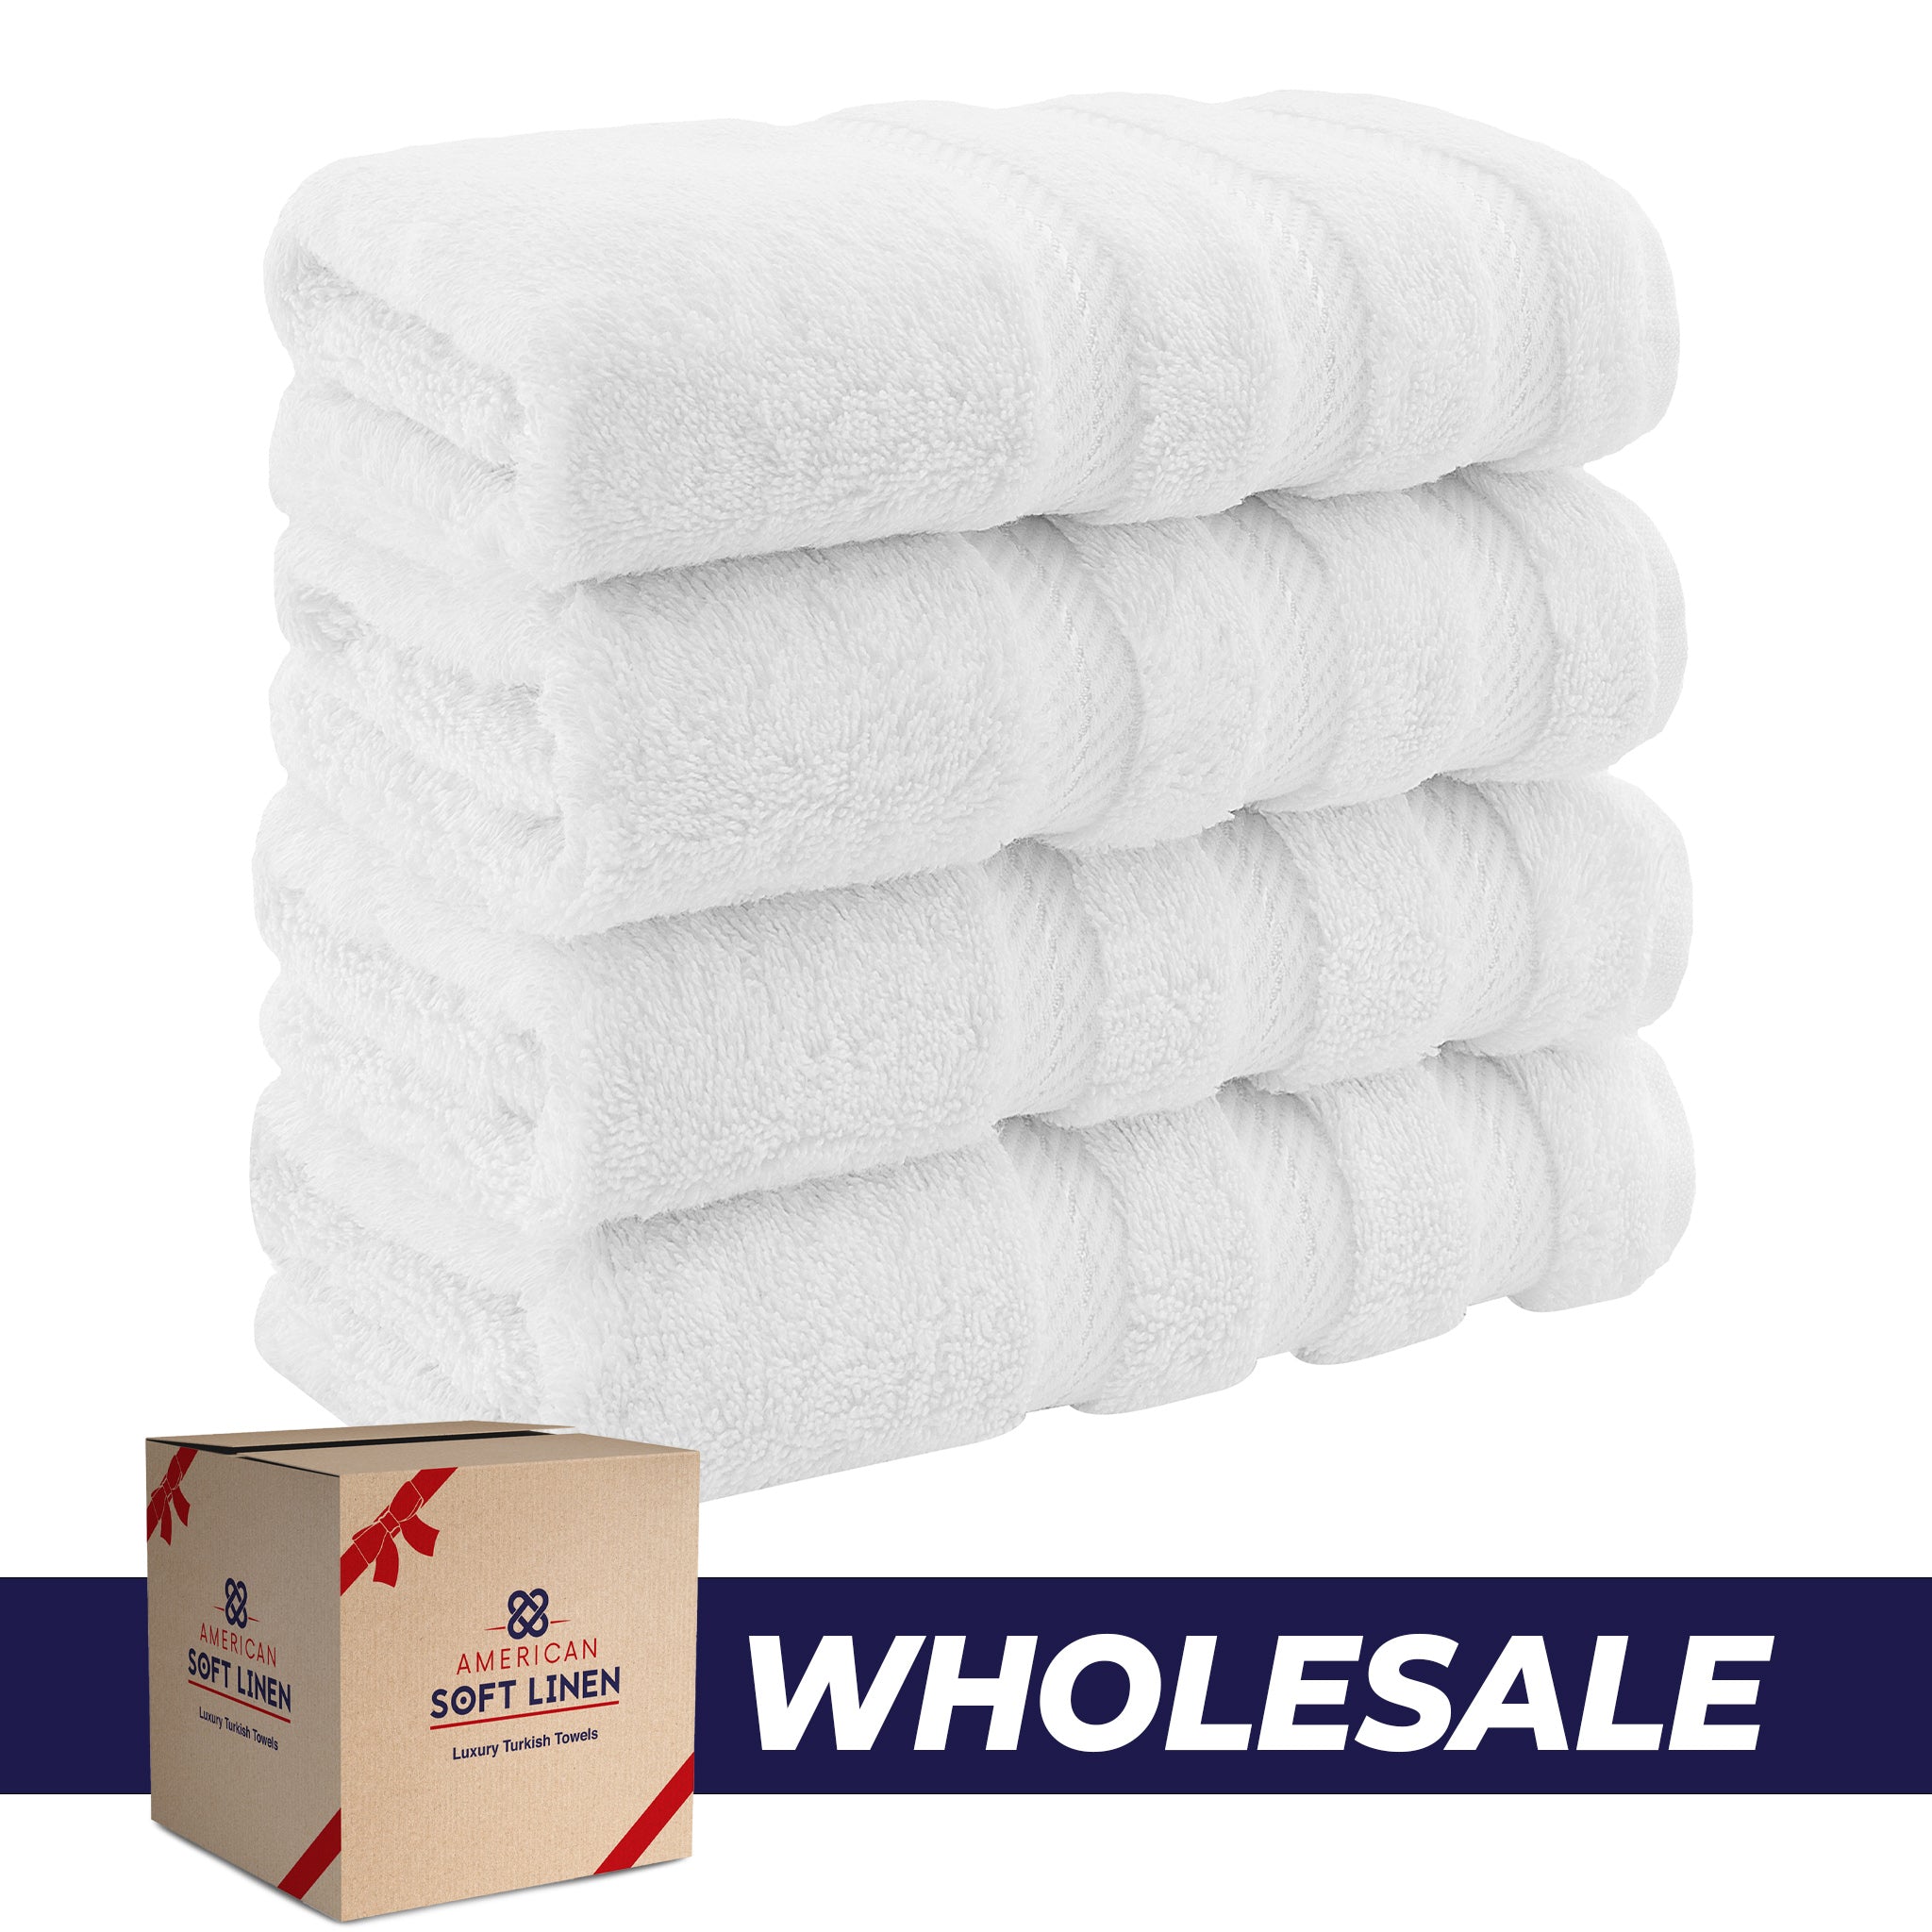 Shop Wholesale Bath Towels, Bath Towels in Bulk